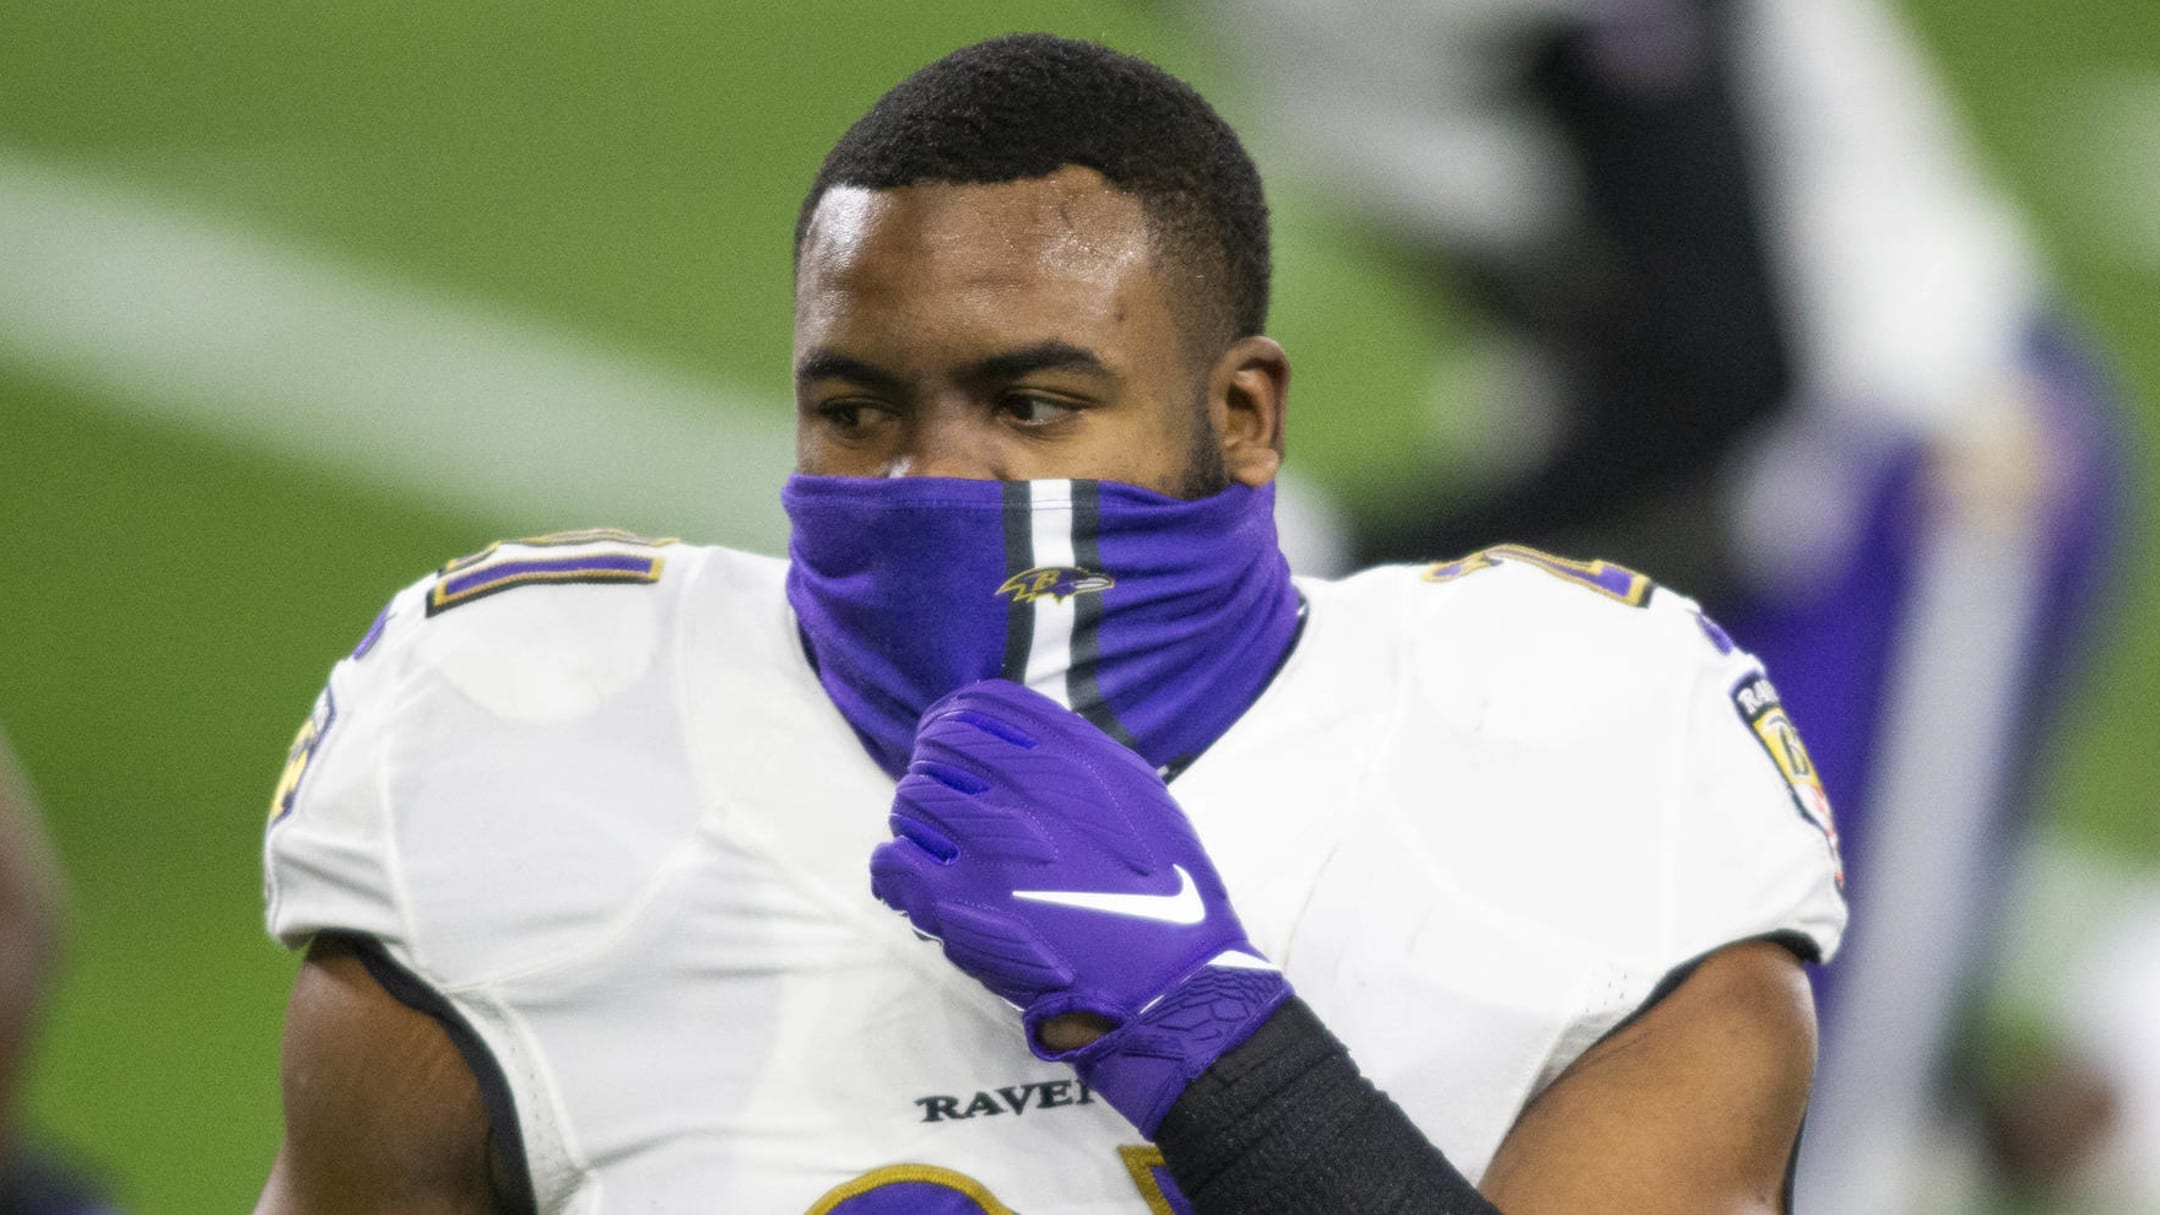 Report: Ravens' Mark Ingram to be healthy scratch vs. Bills